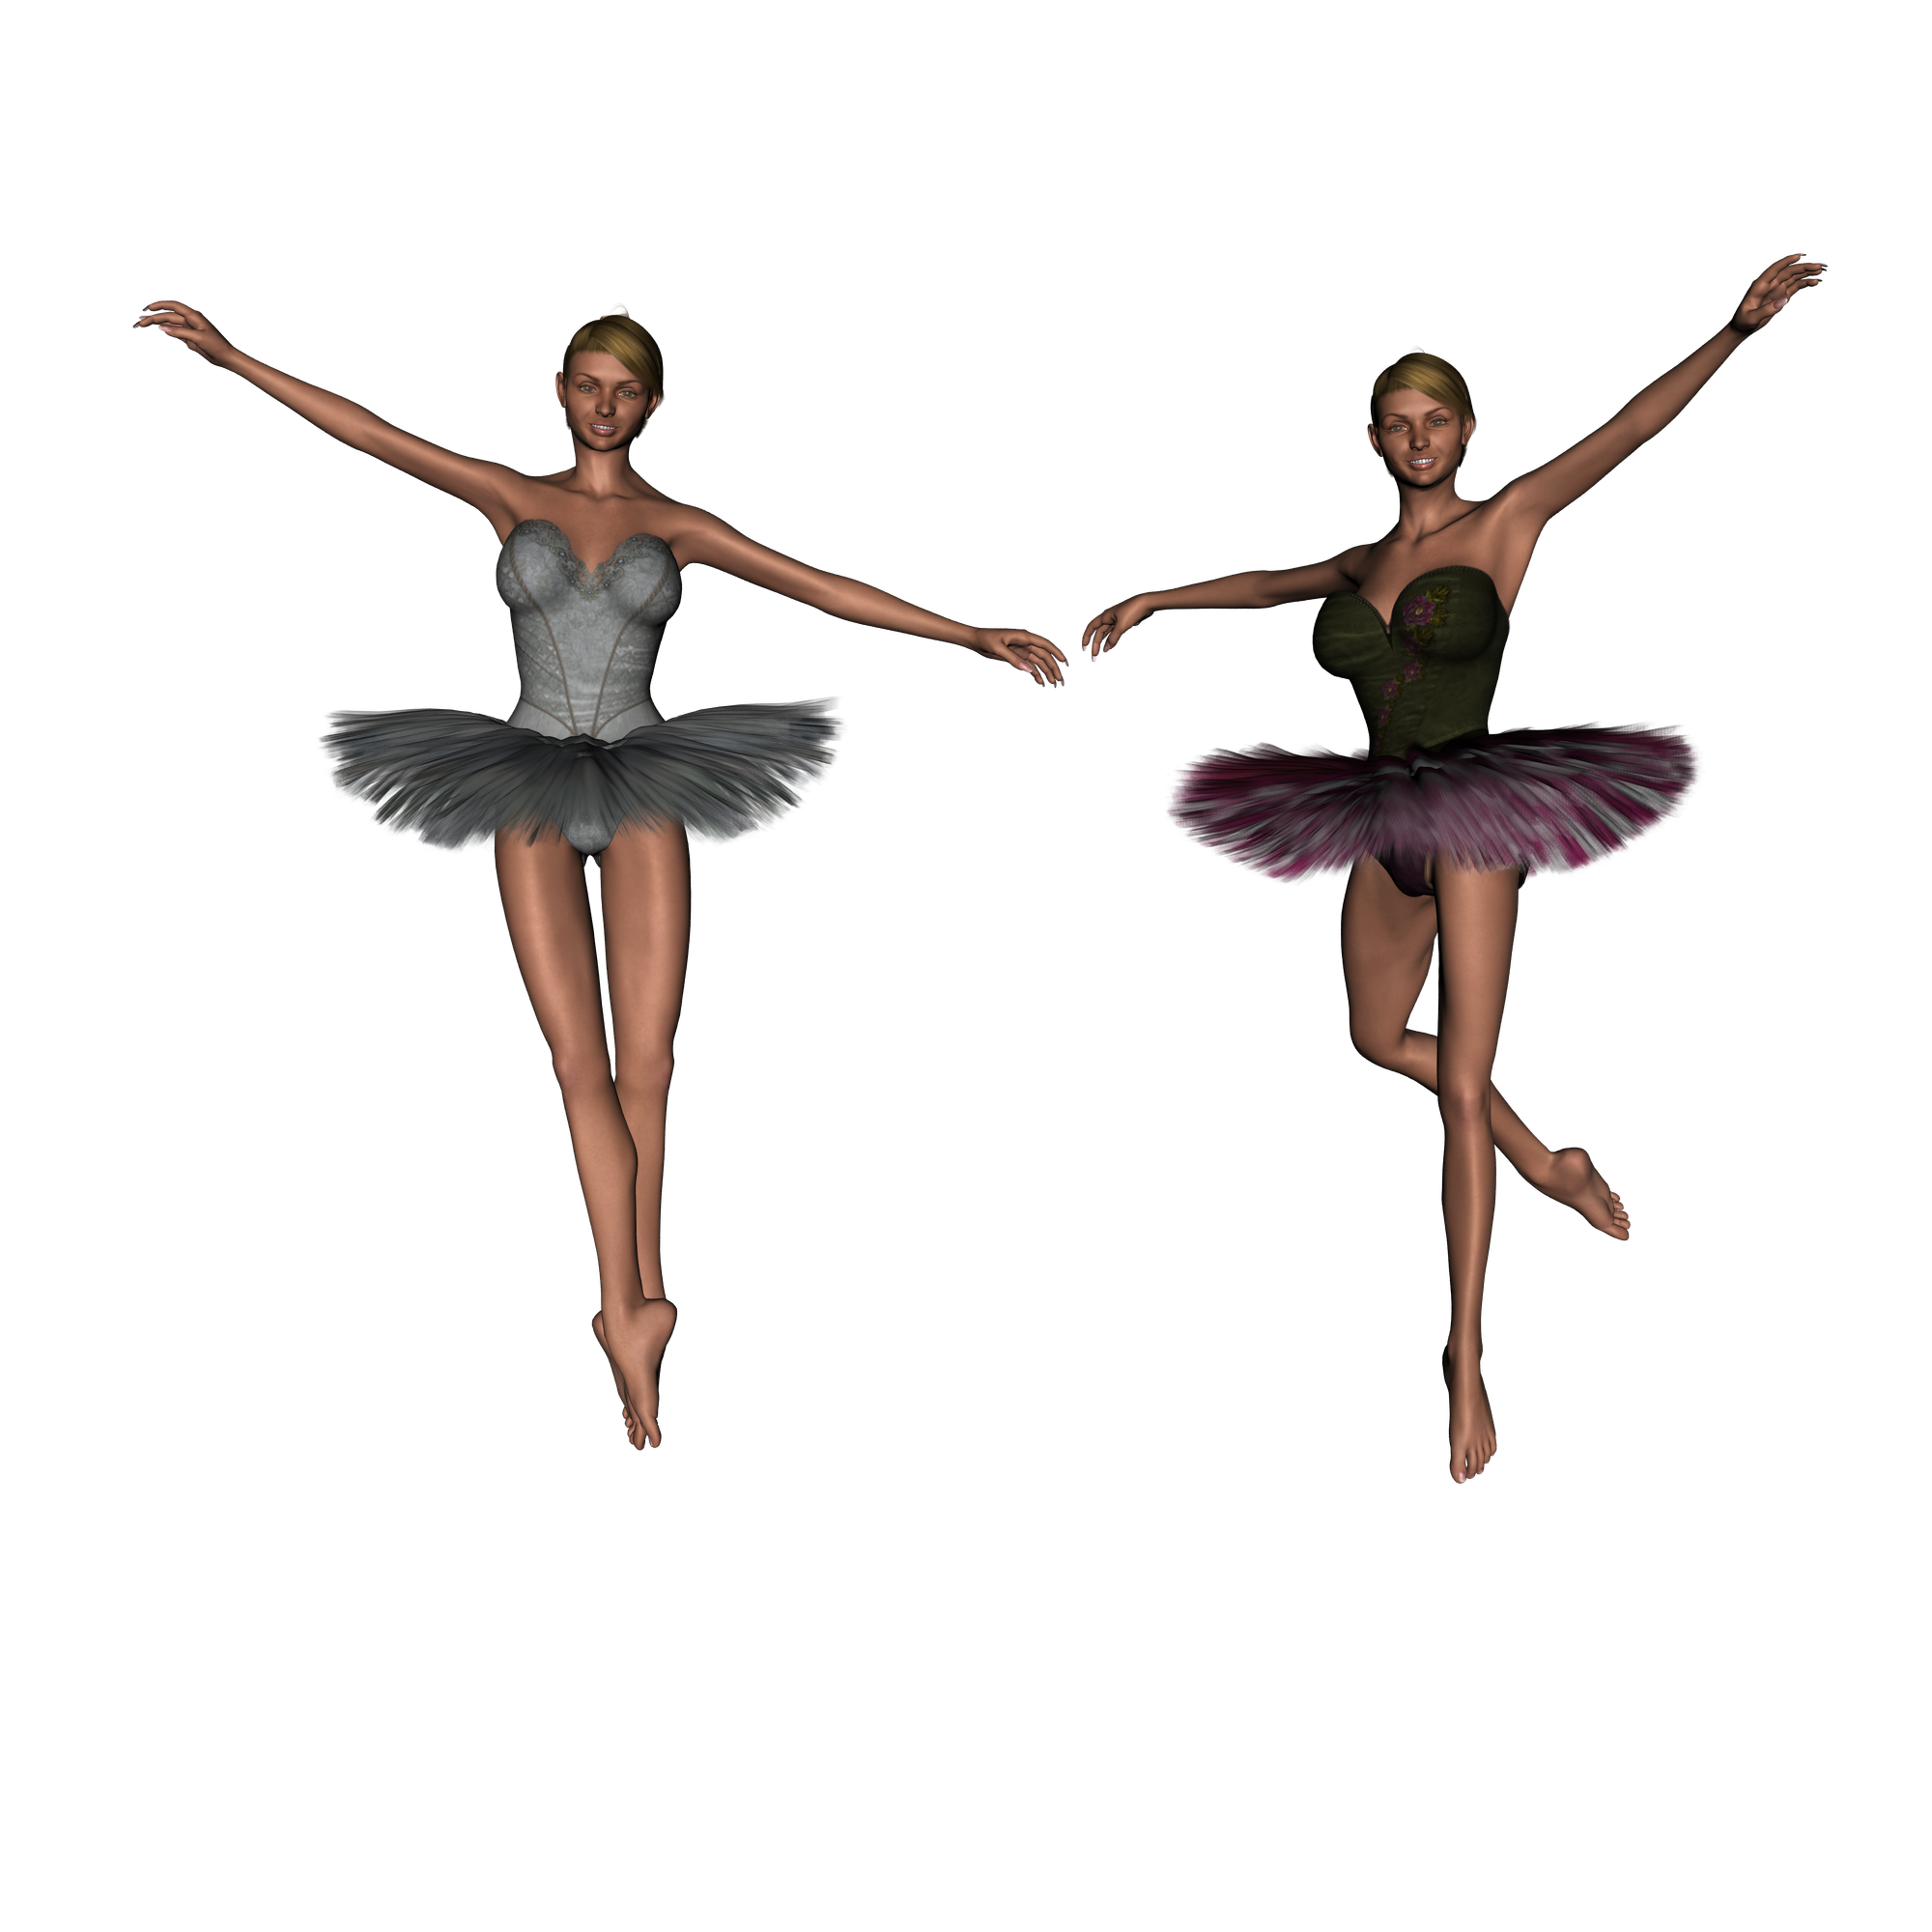 Ballet Dance Ballerina Performance Free Image Download